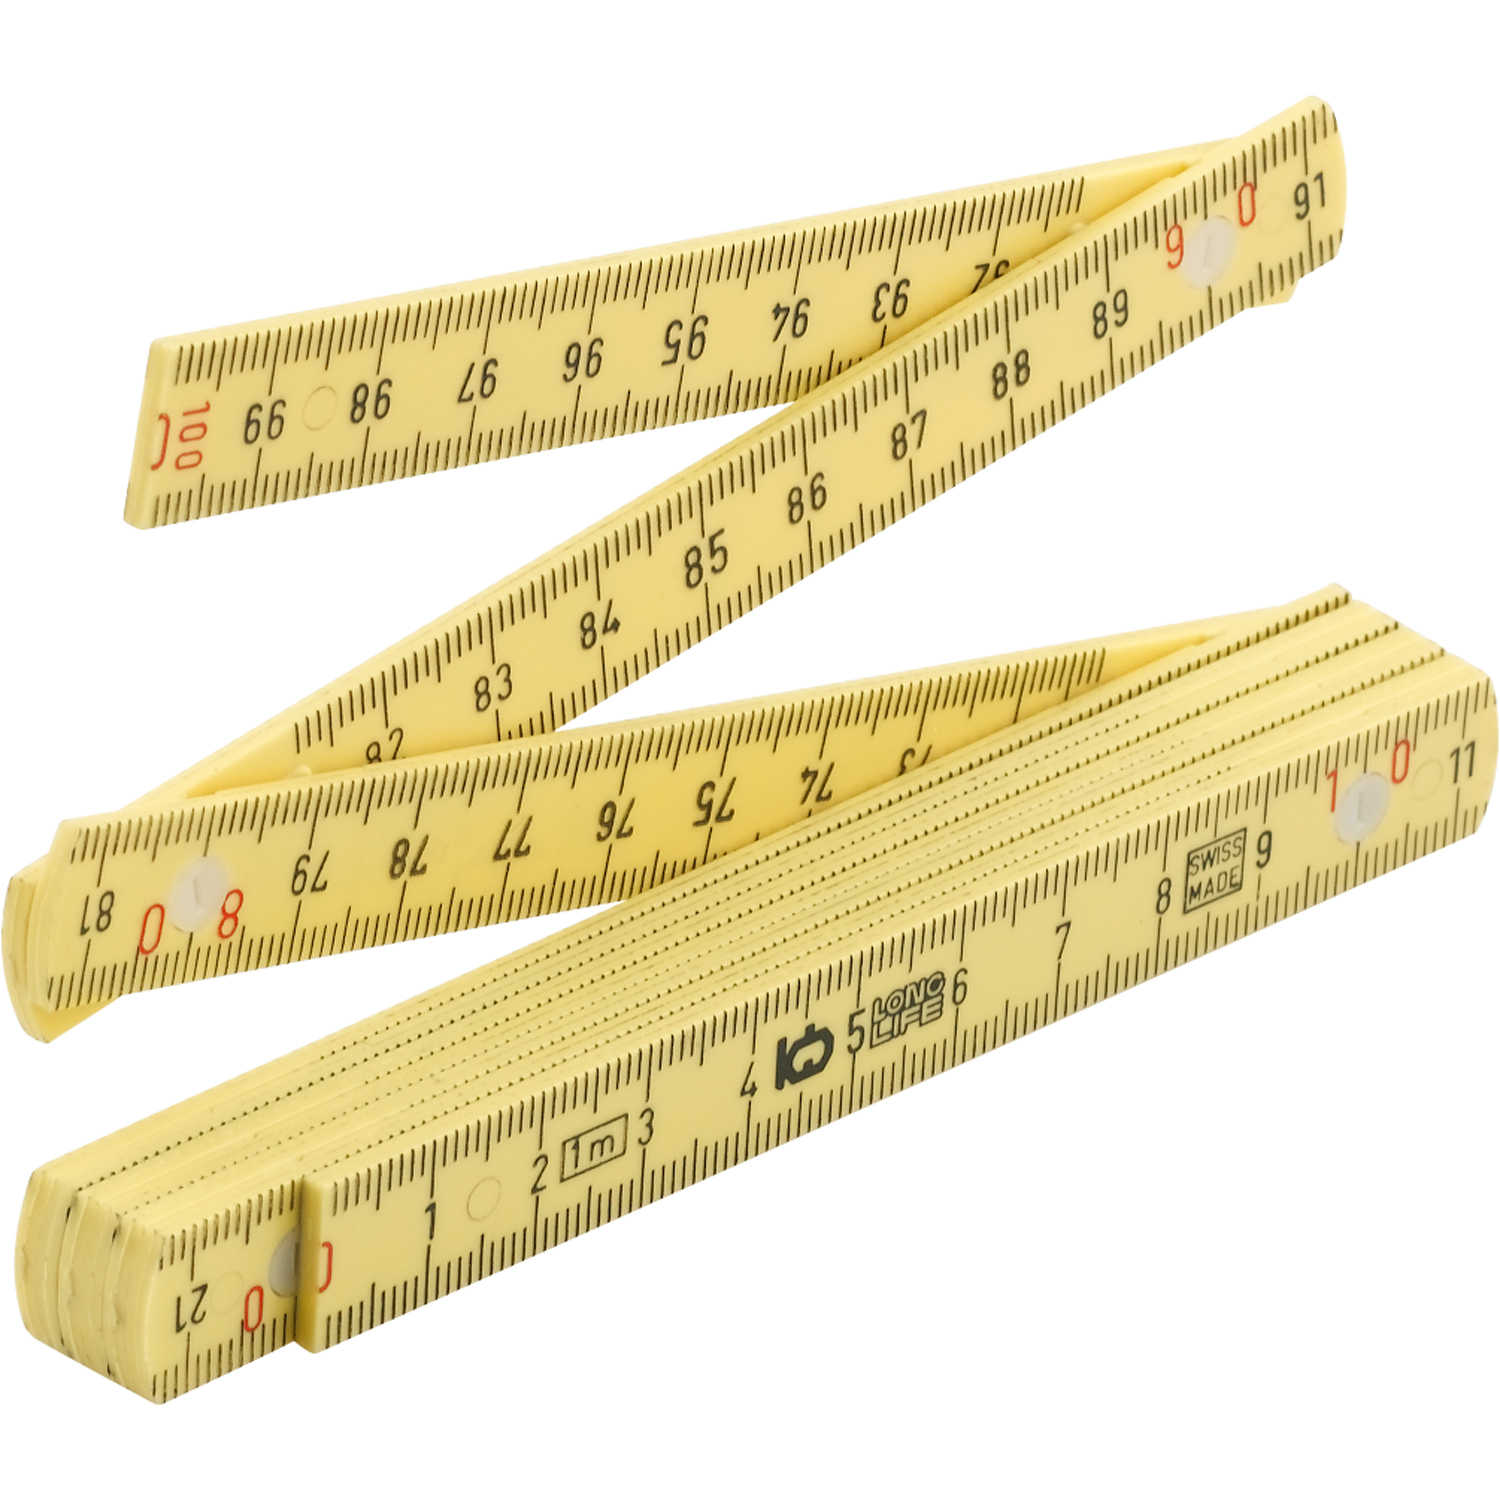 Gaetooely Portable Carpenter Wooden Folding Ruler 100cm/39inch